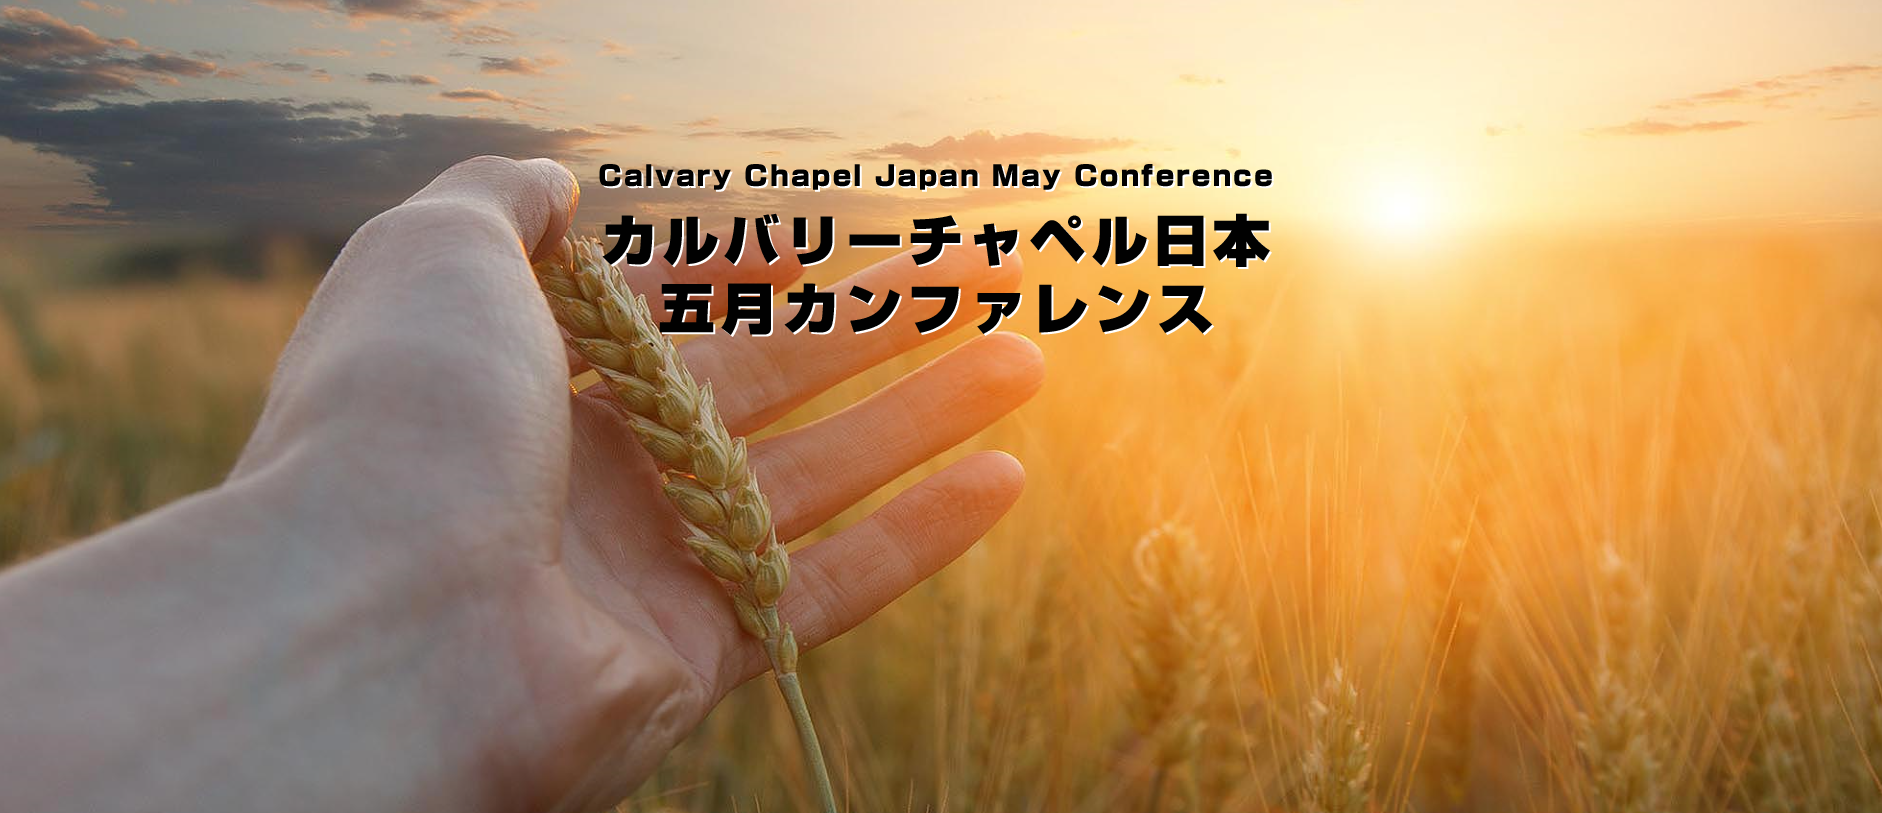 Calvary Chapel Japan Conference